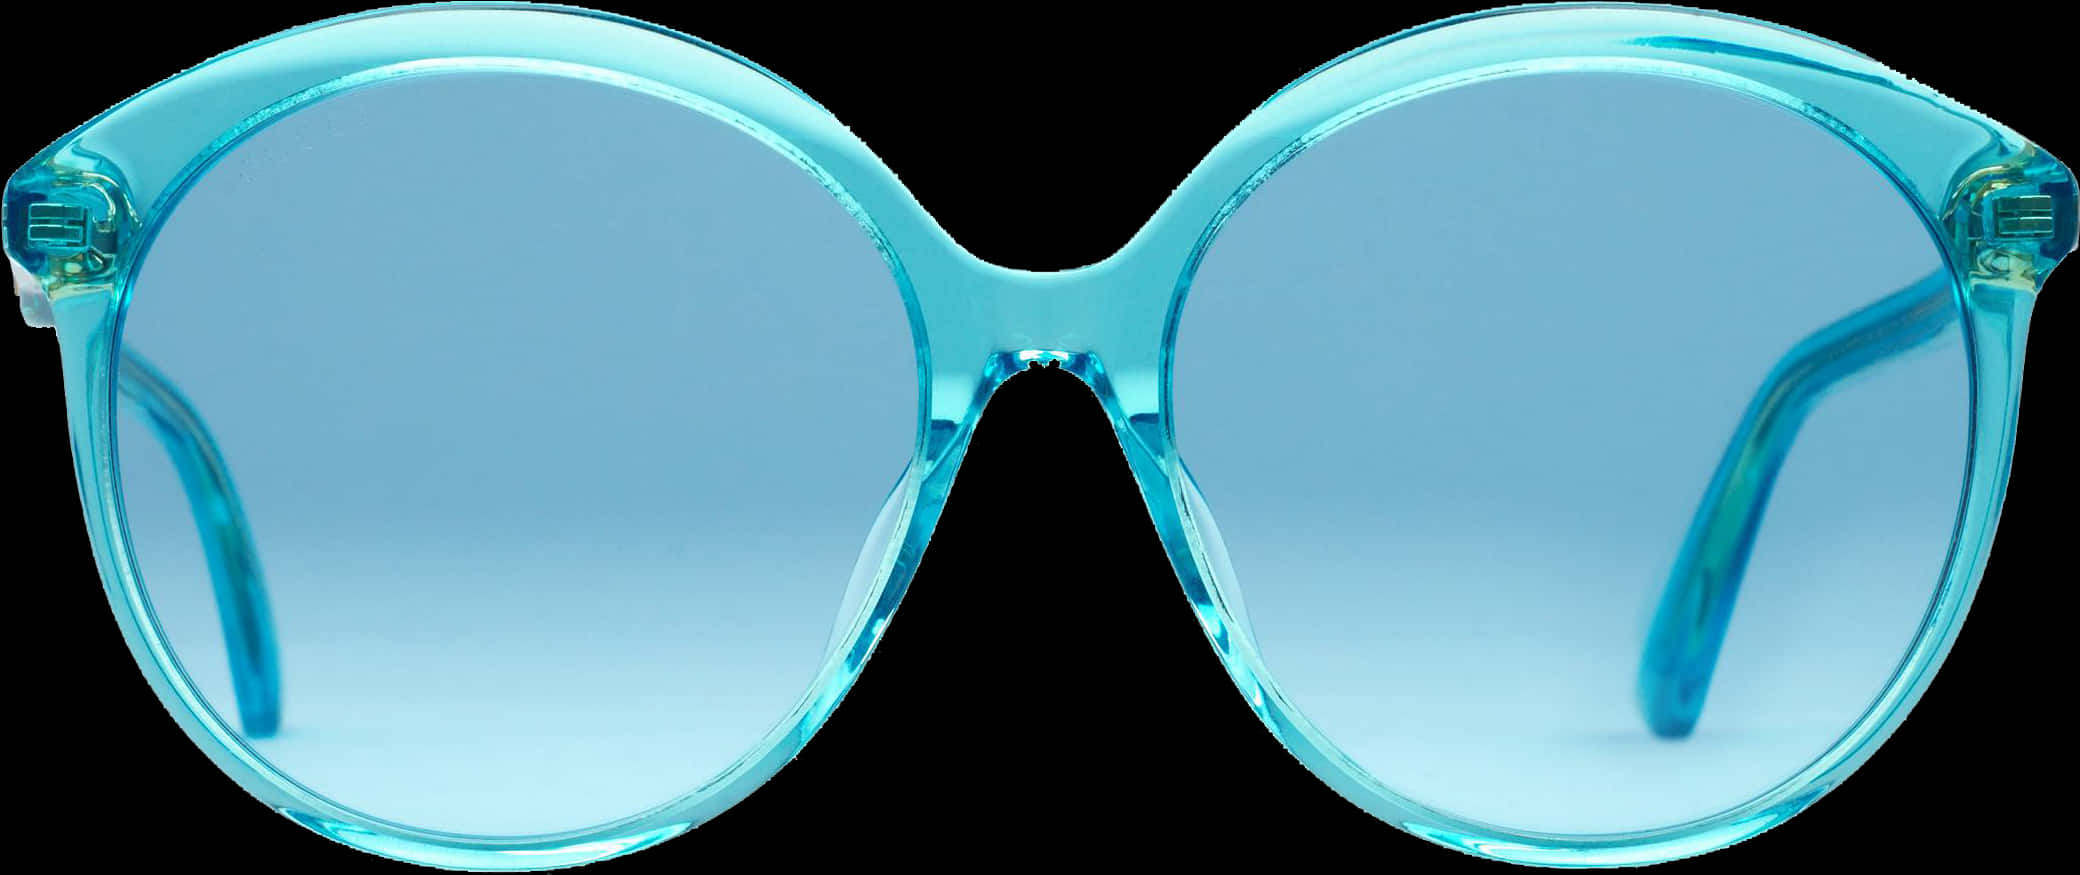 Blue Round Glasses Transparent Background